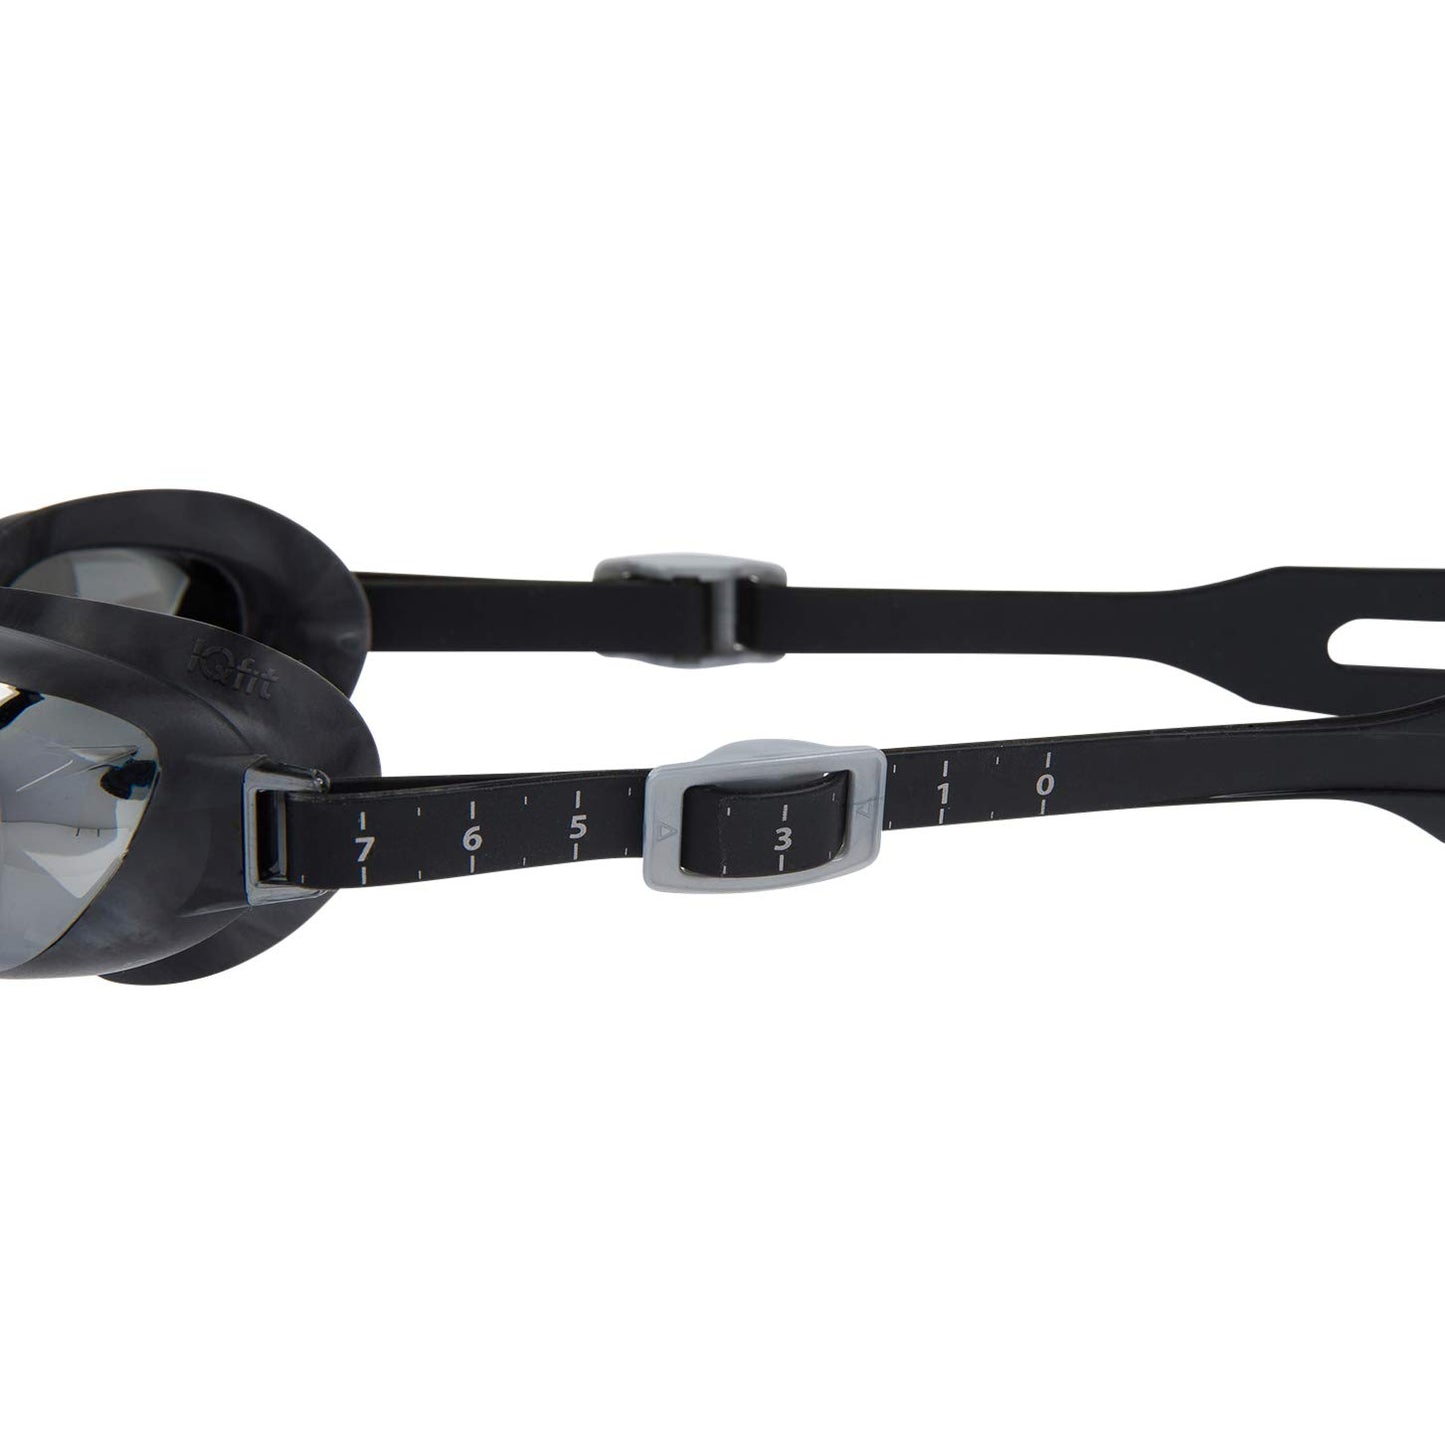 Speedo 811770C742 Aquapur Mirror Specs, 1SZ (Black/Silver/Chrome) - Best Price online Prokicksports.com